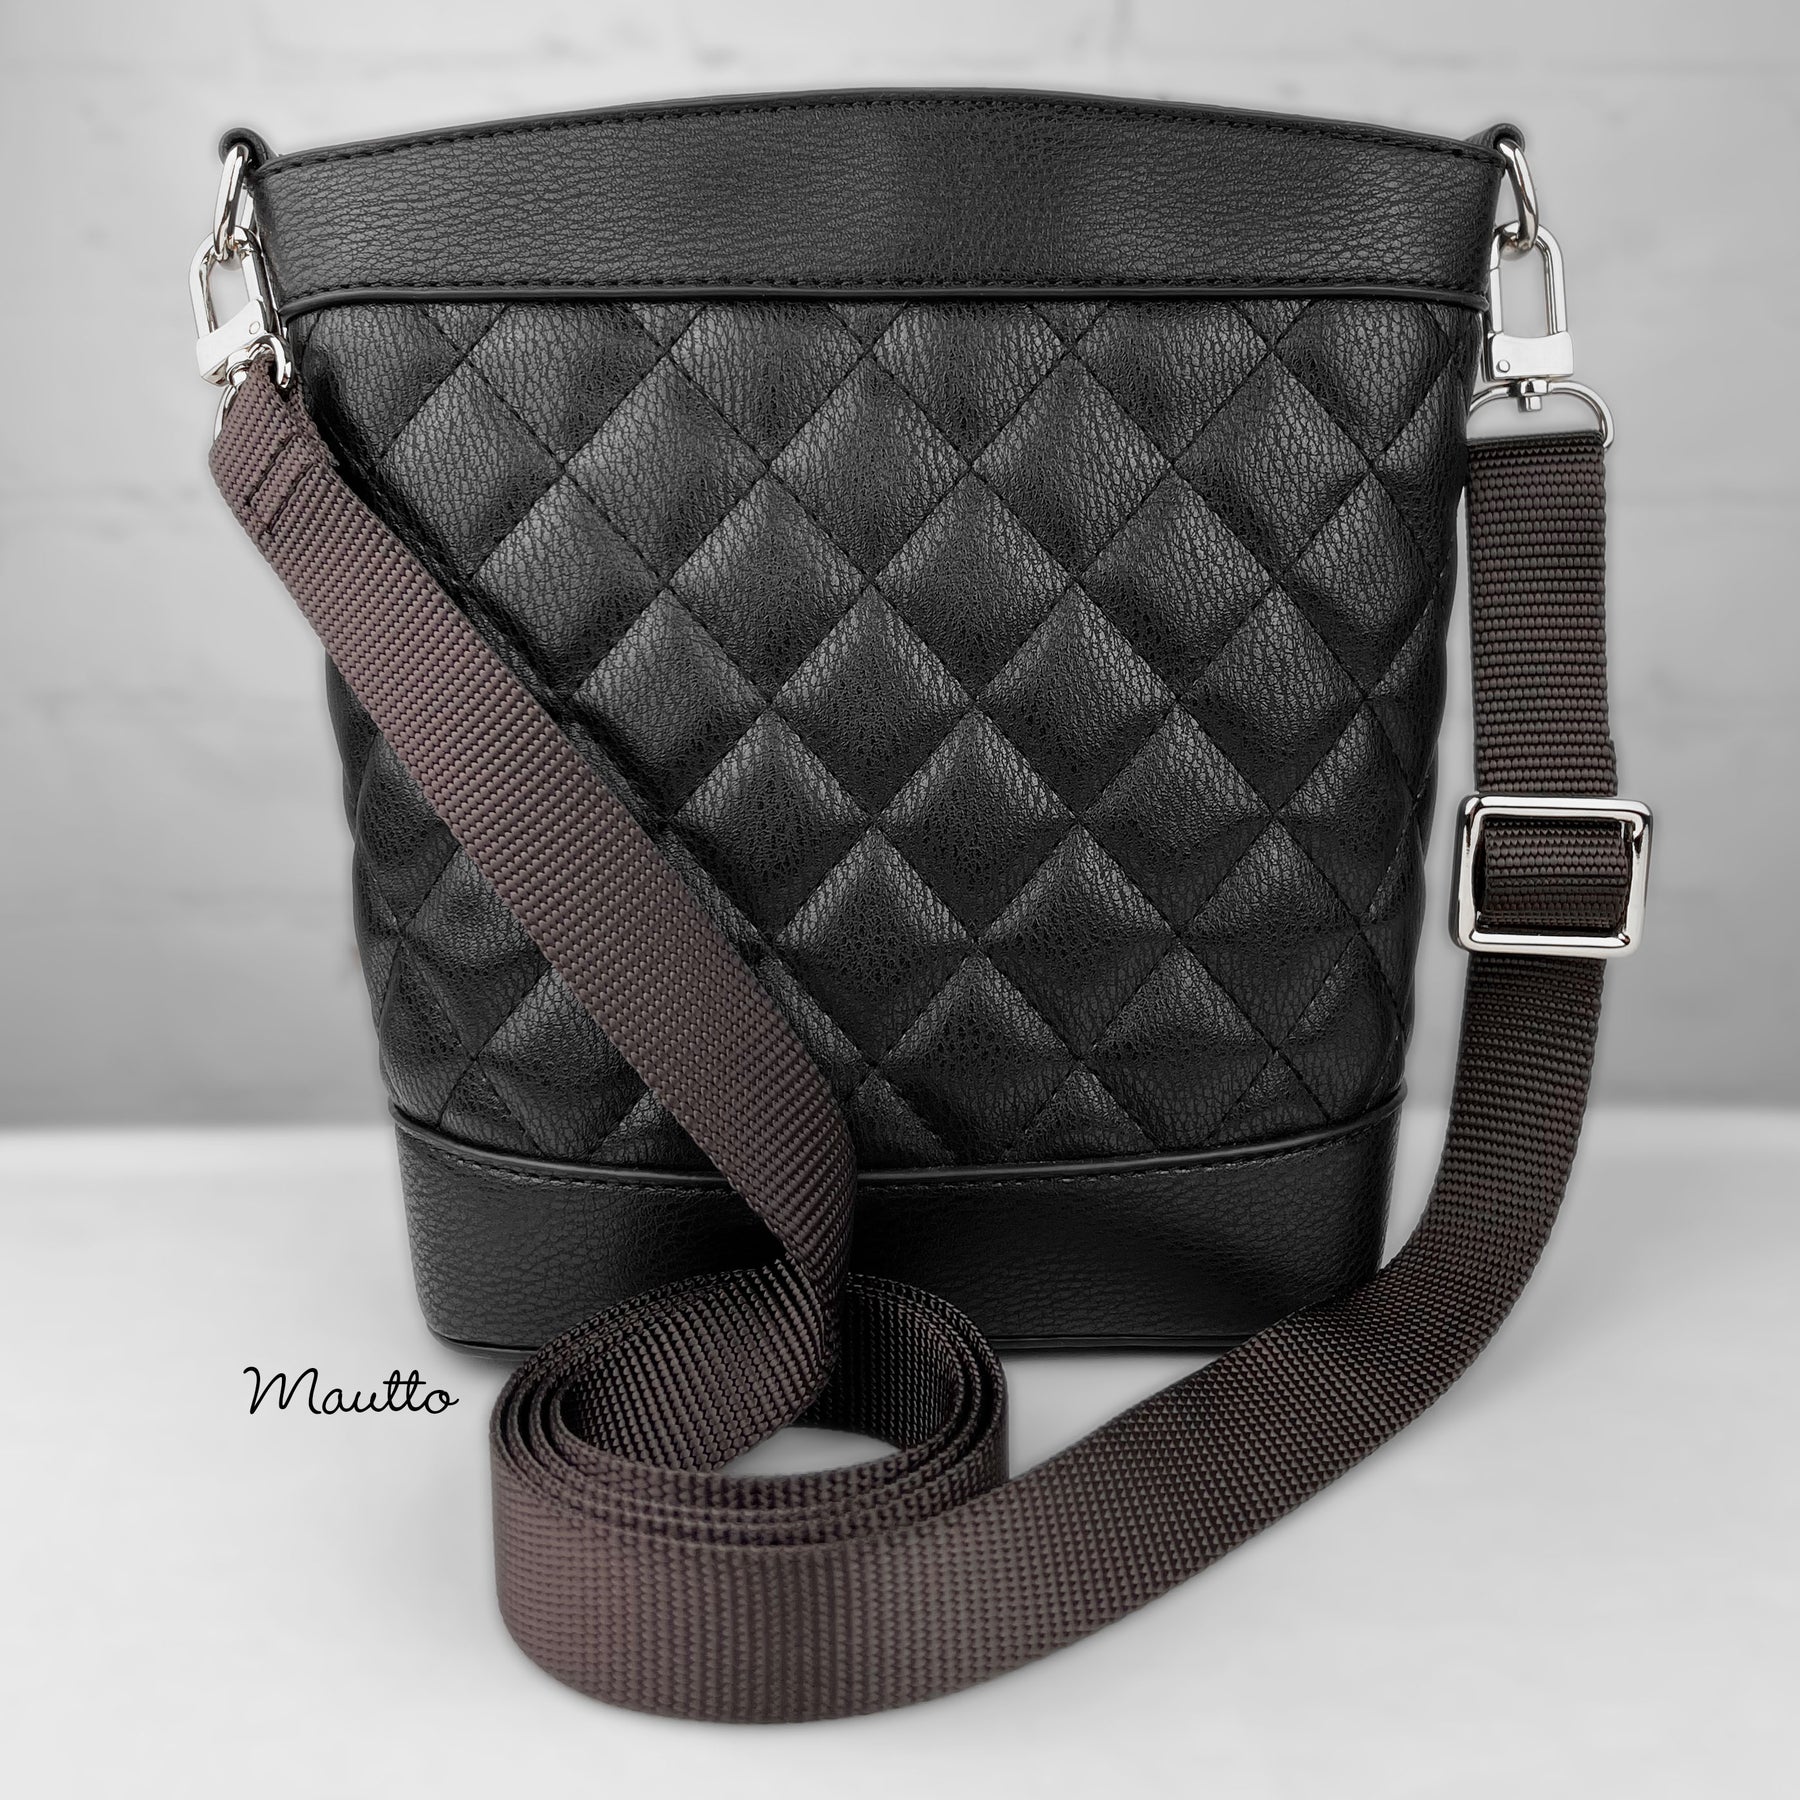 Custom Replacement Straps & Handles for Louis Vuitton (LV) Handbags/Purses/ Bags, Mautto Handbags